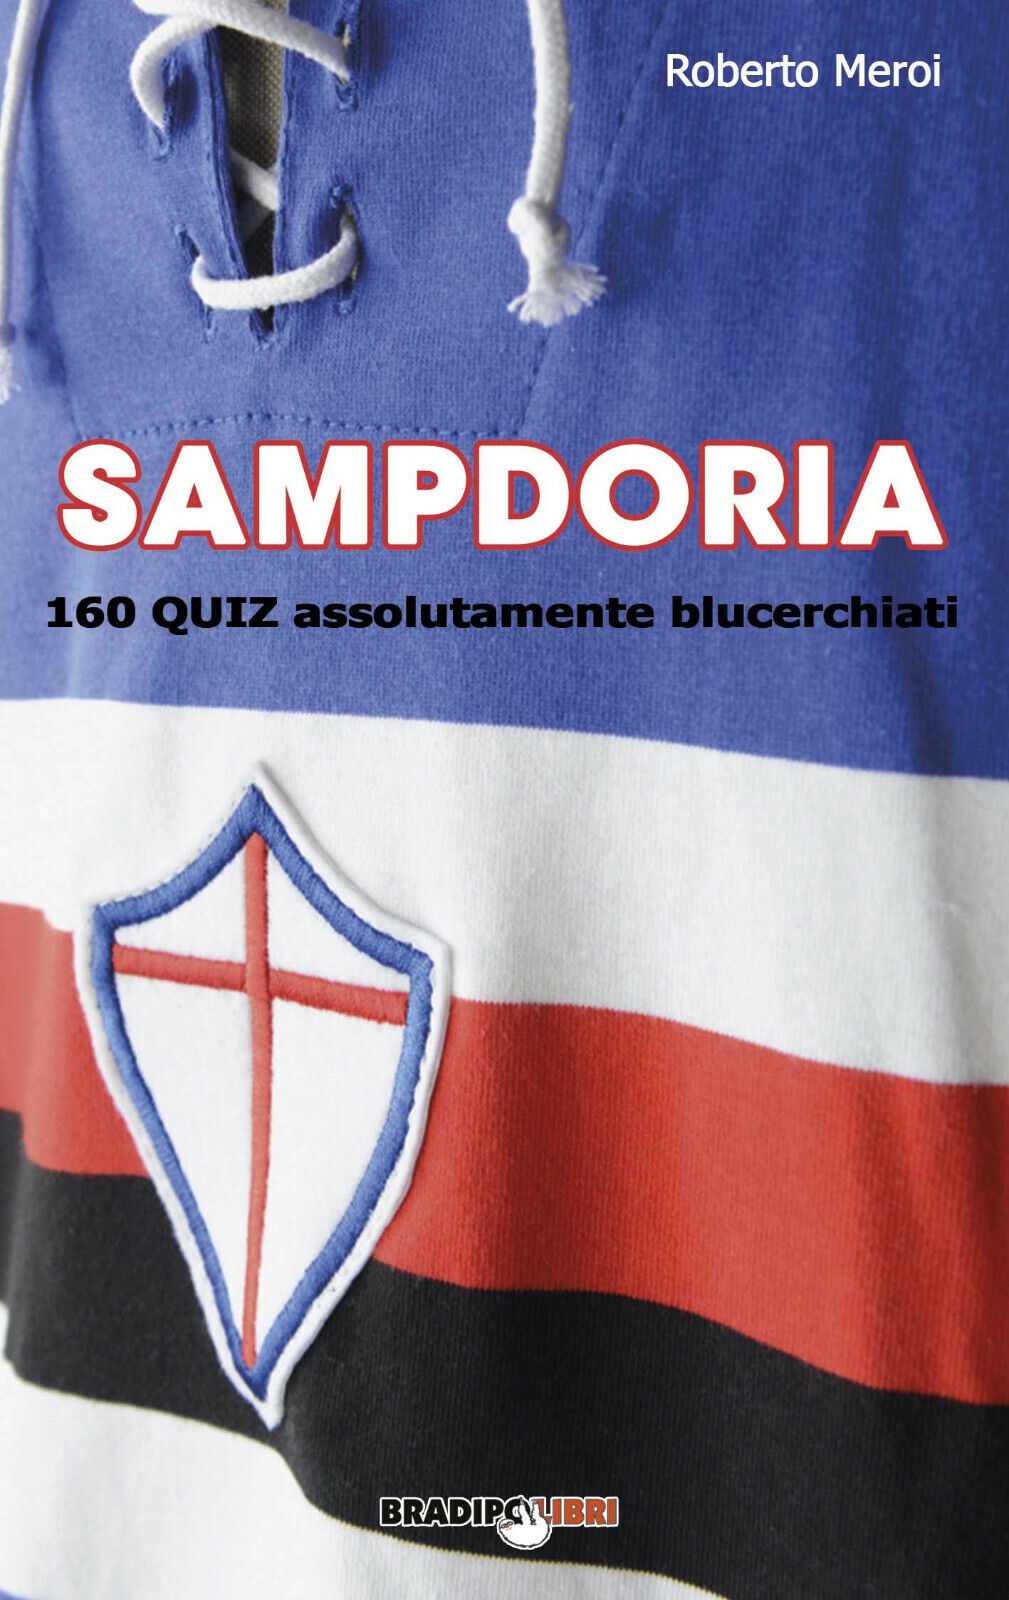 Sampdoria. 160 quiz assolutamente blucerchiati - Roberto Meroi - 2020